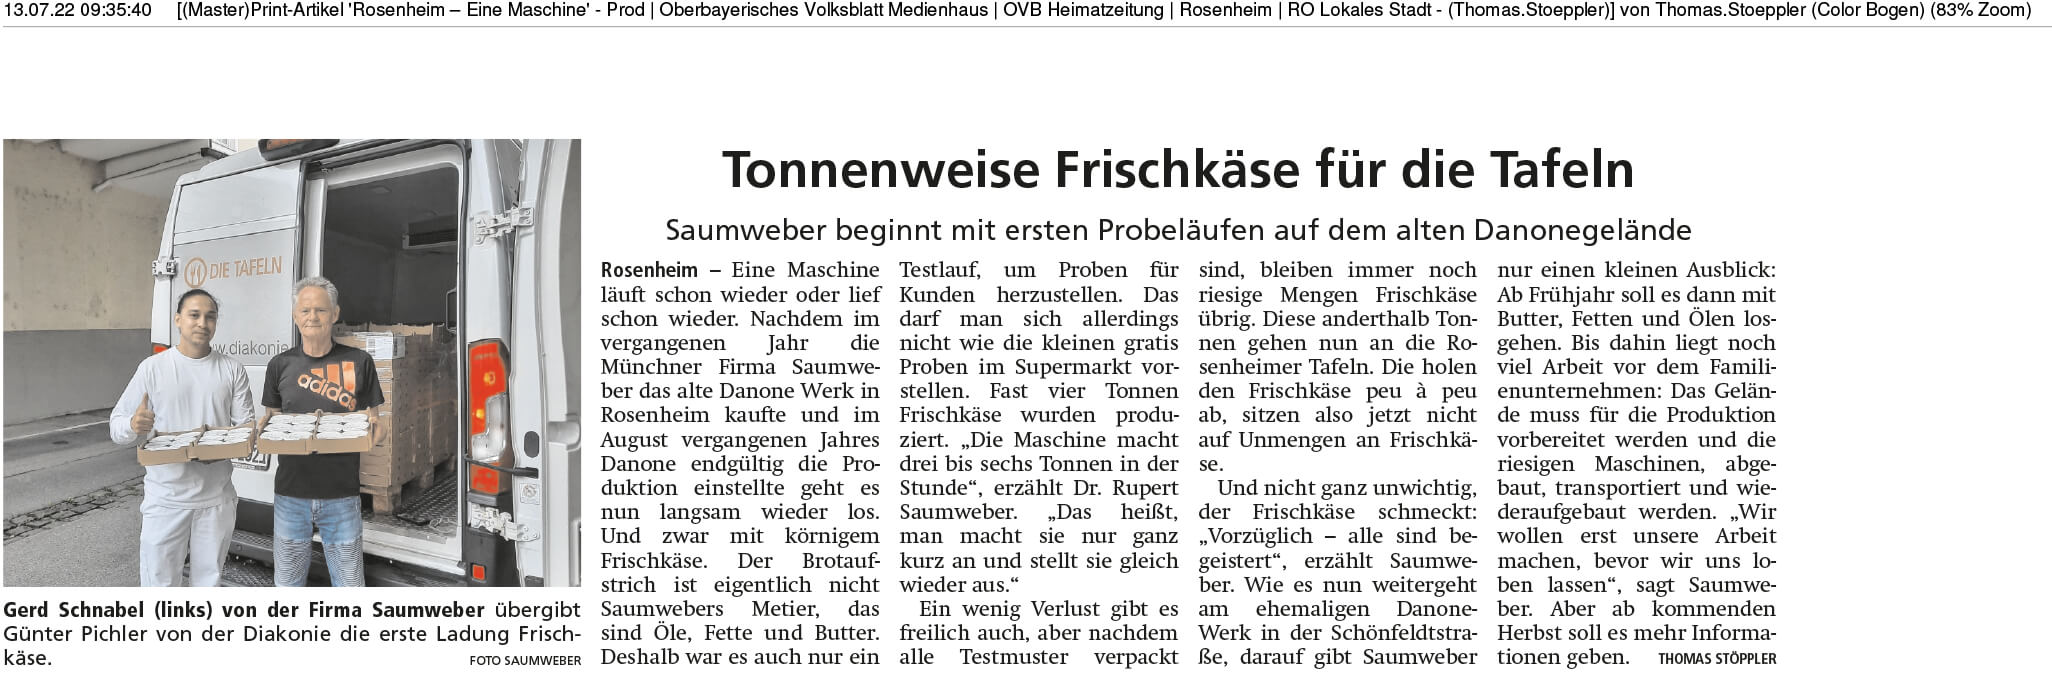 Print Artikel Rosenheim KF